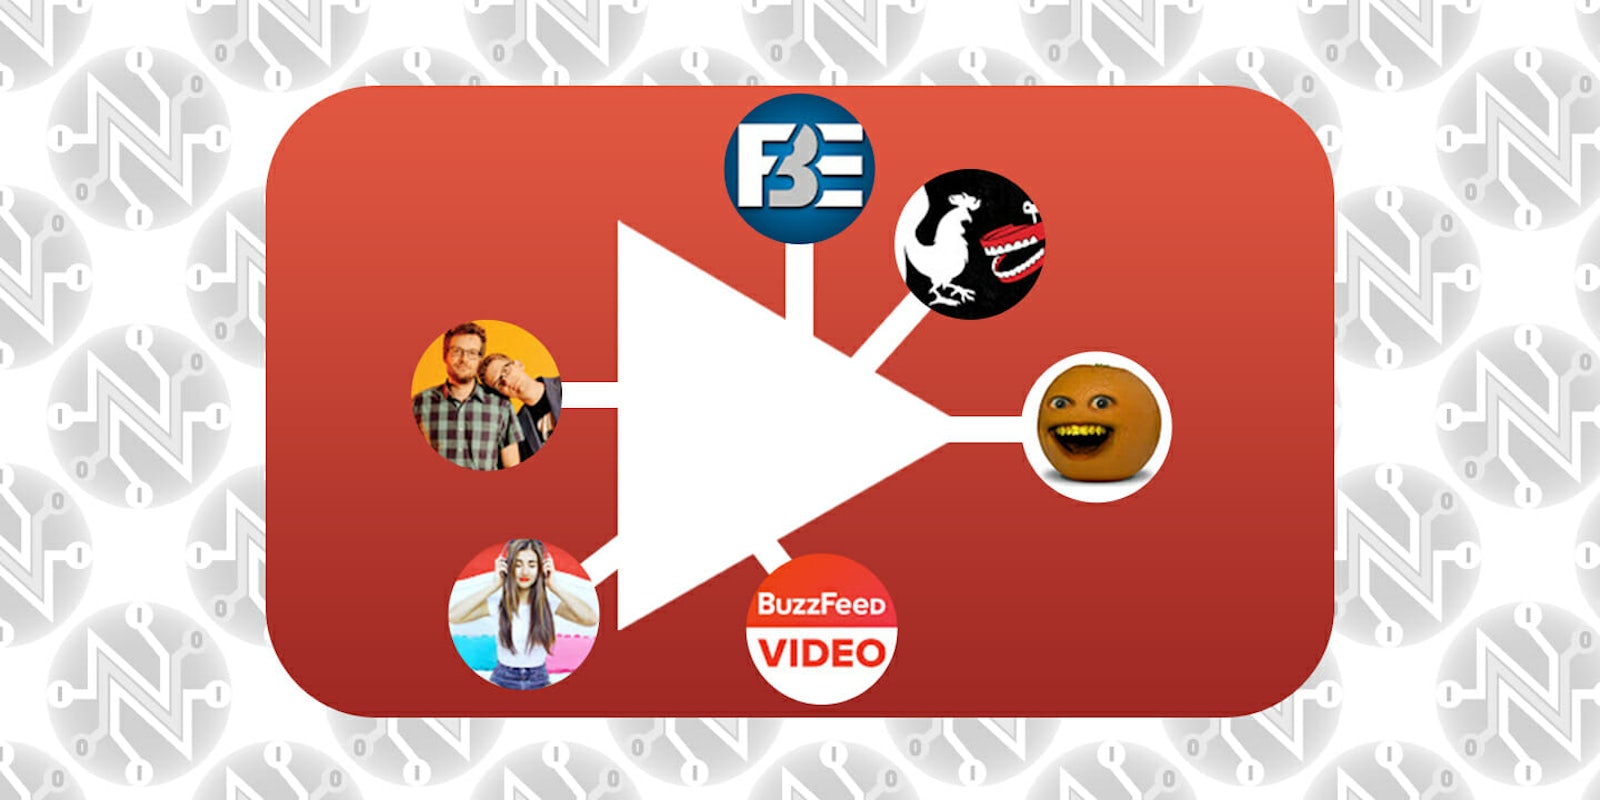 YouTube/Net Neutrality logo mashup